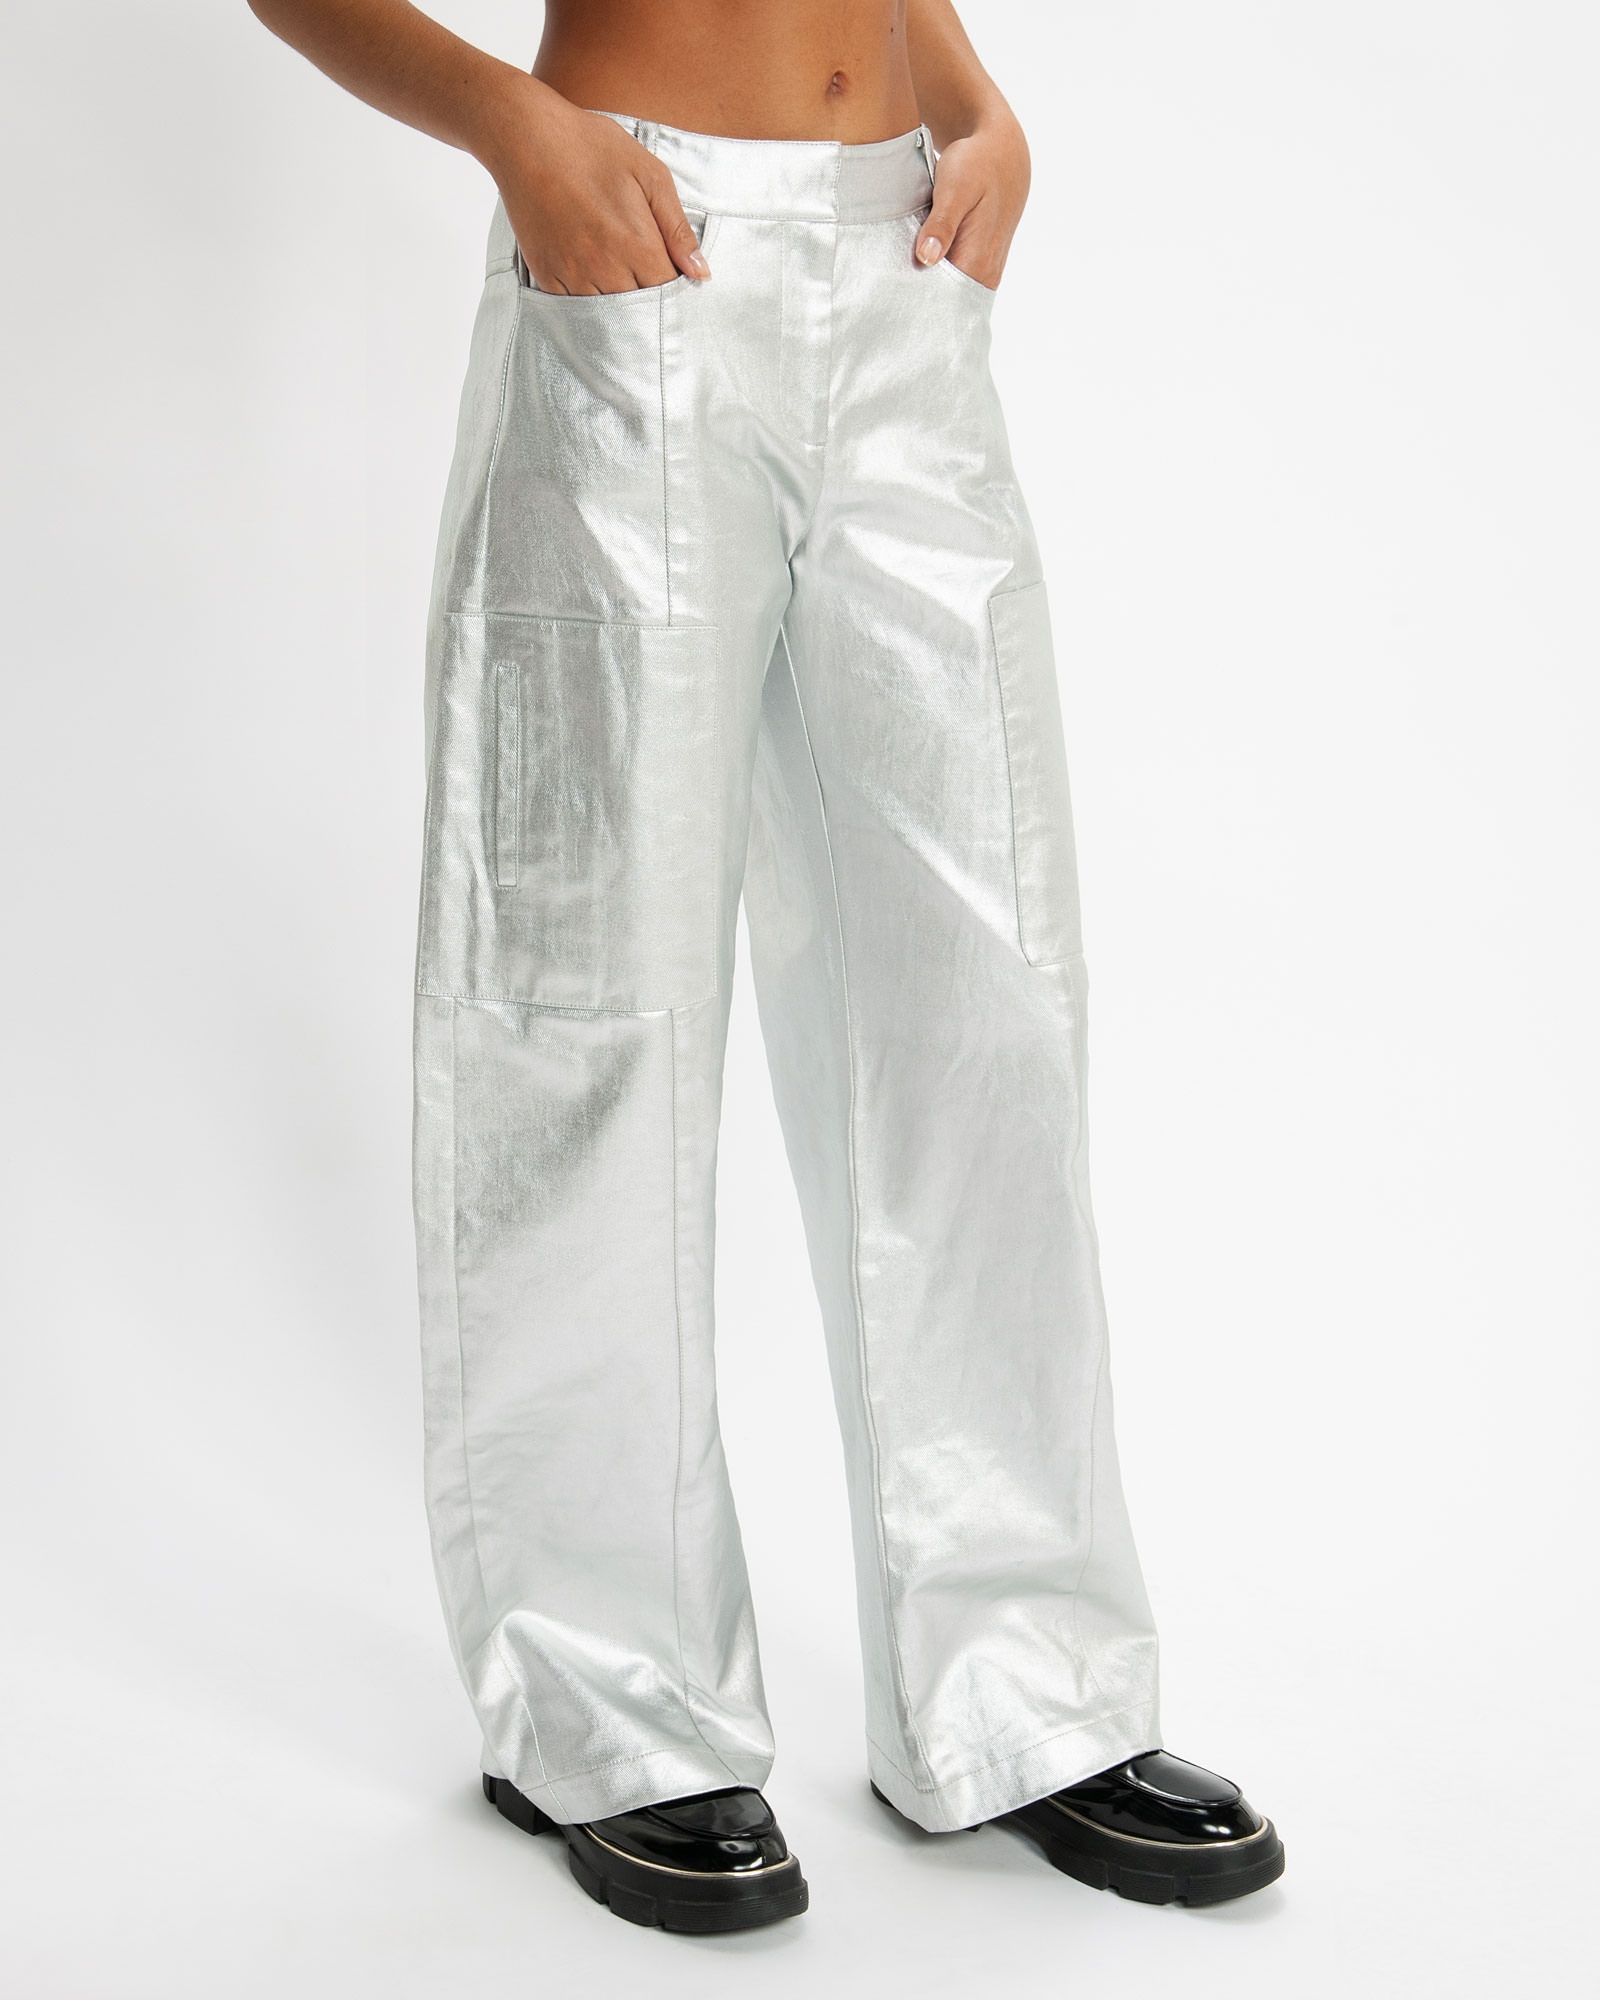 Metallic Jeans | Buy Pants Online - Cue